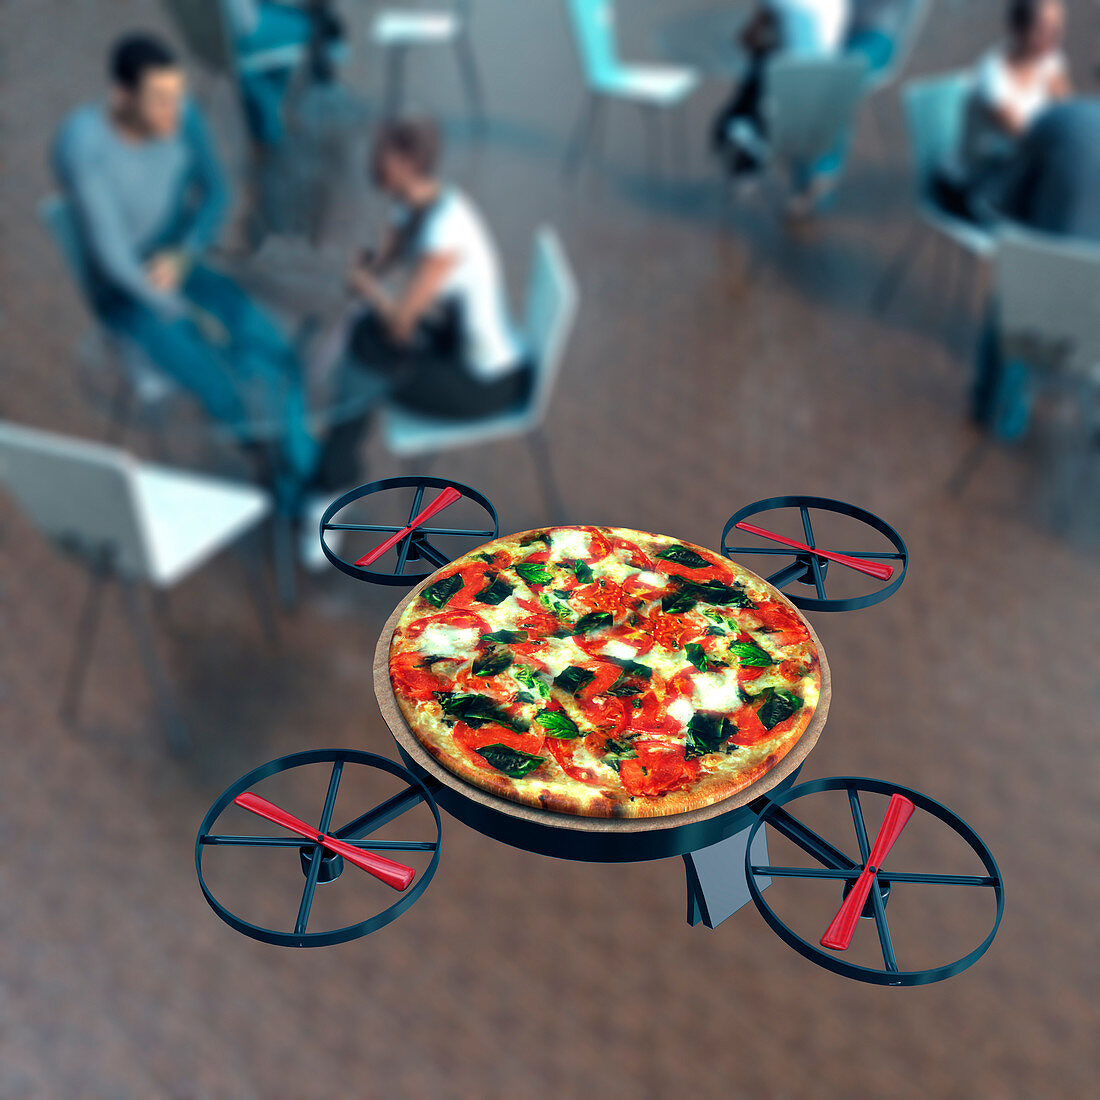 Food delivery drone,conceptual image